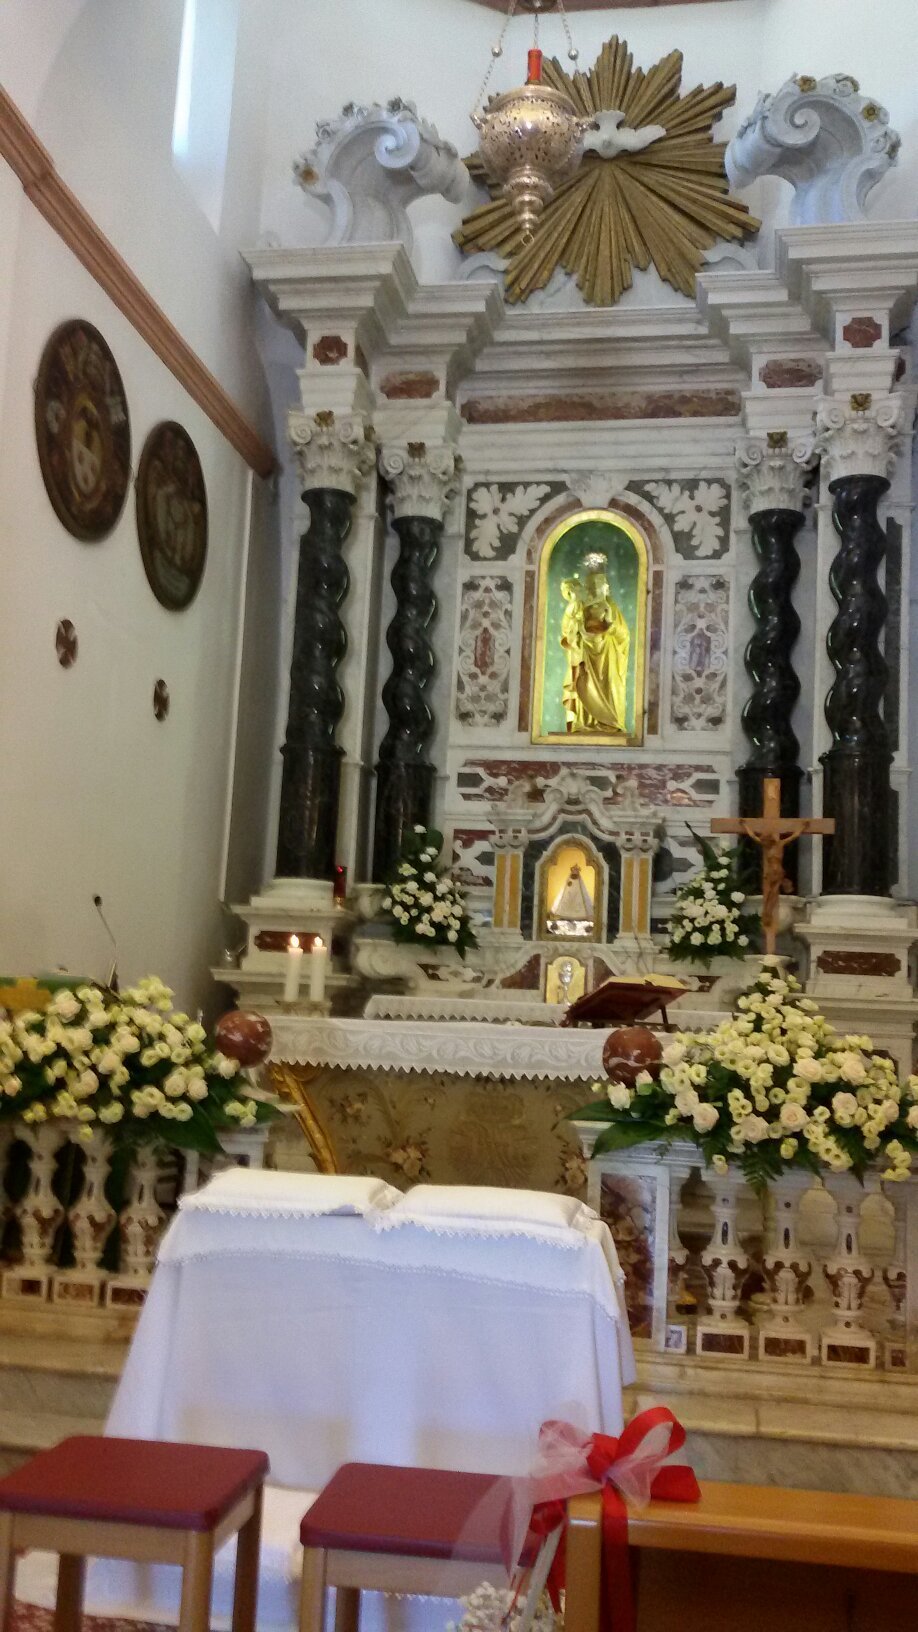 Santuario di Nostra Signora di Valverde